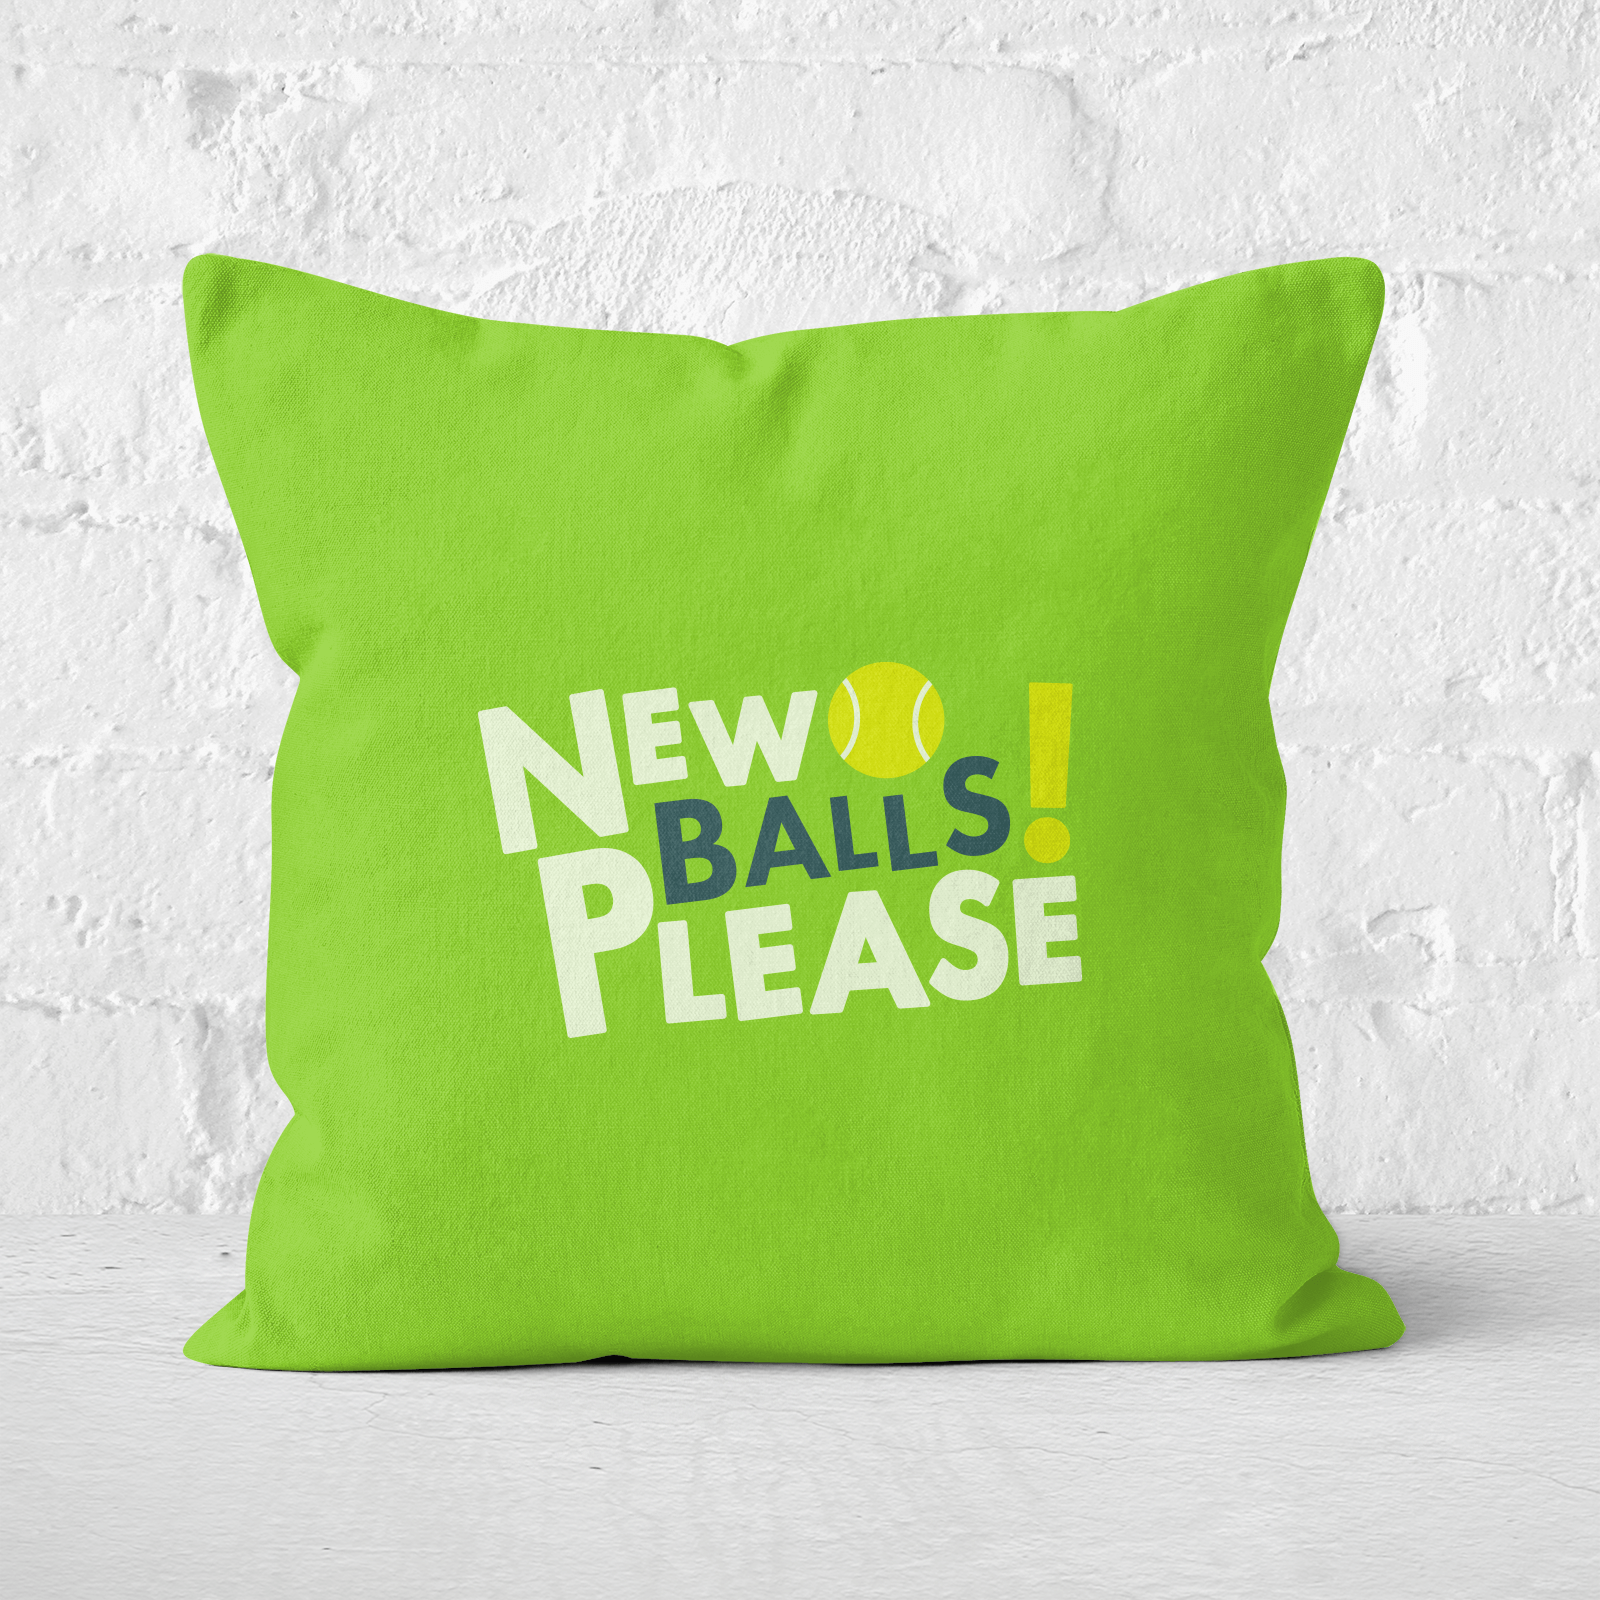 New Balls Please Square Cushion   50x50cm   Soft Touch